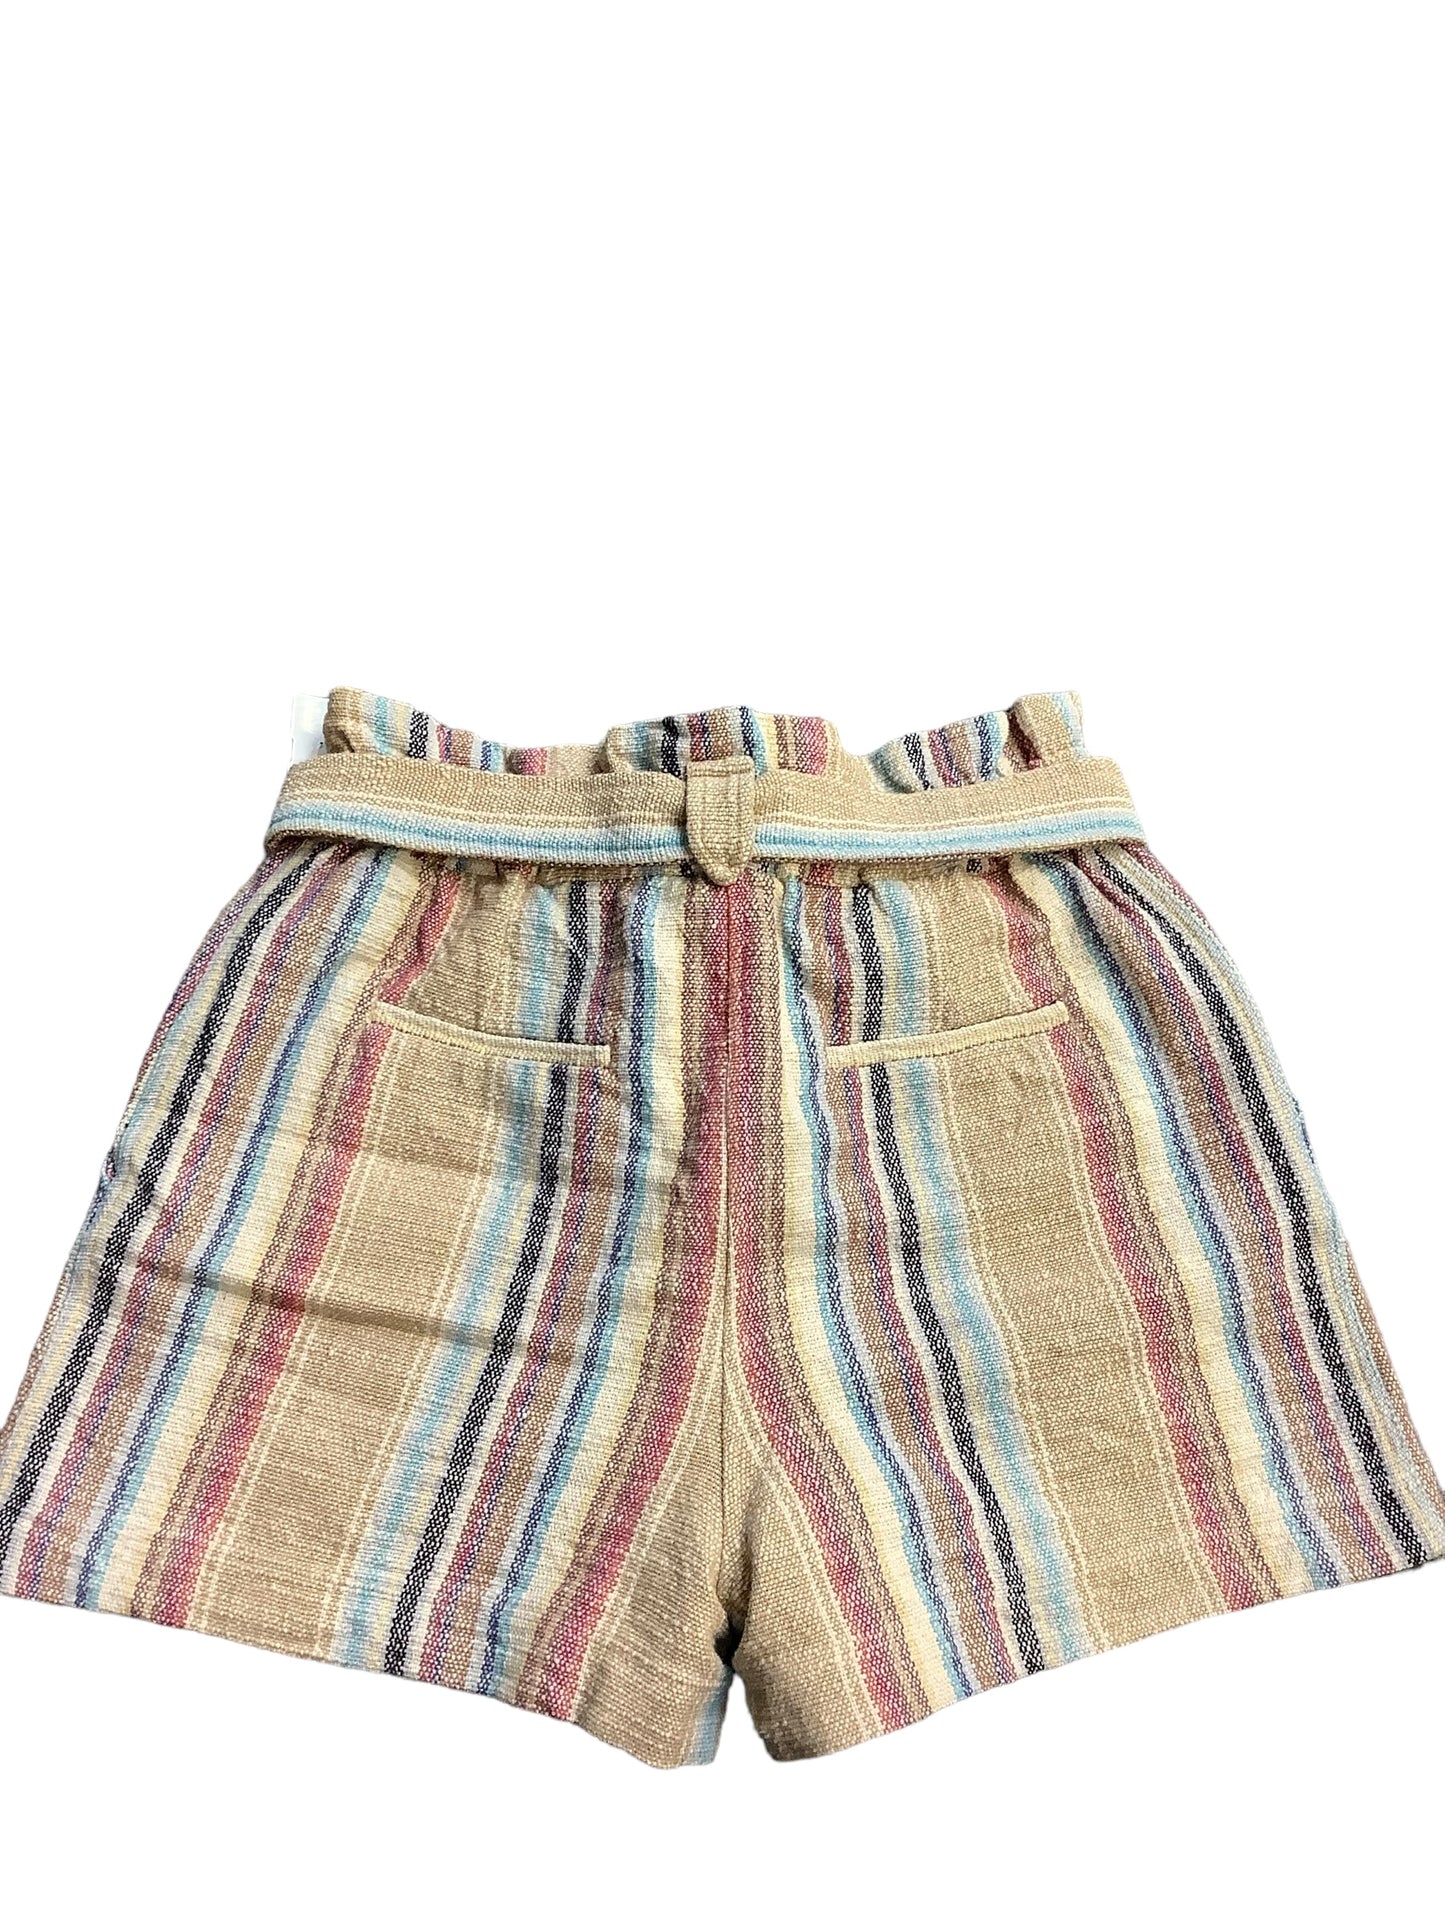 Shorts By Cma  Size: M